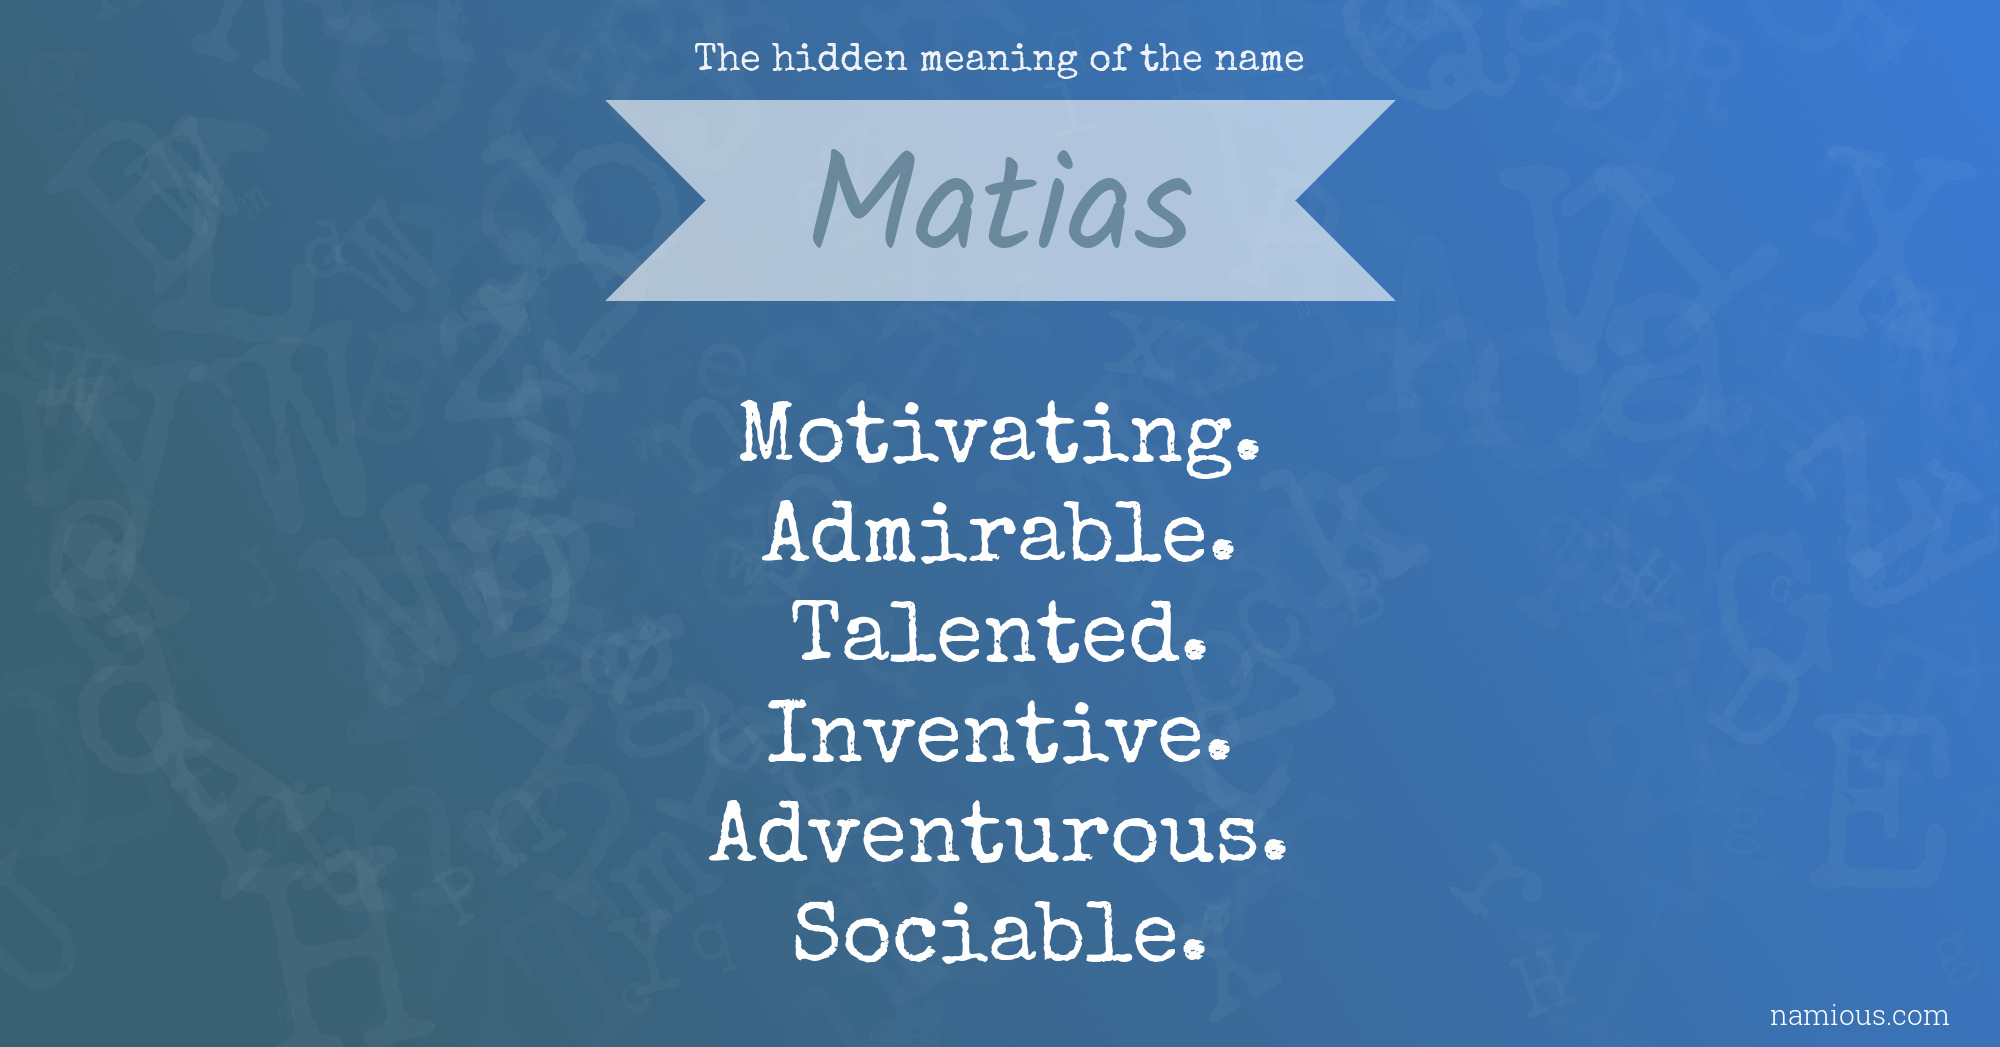 what does matias mean